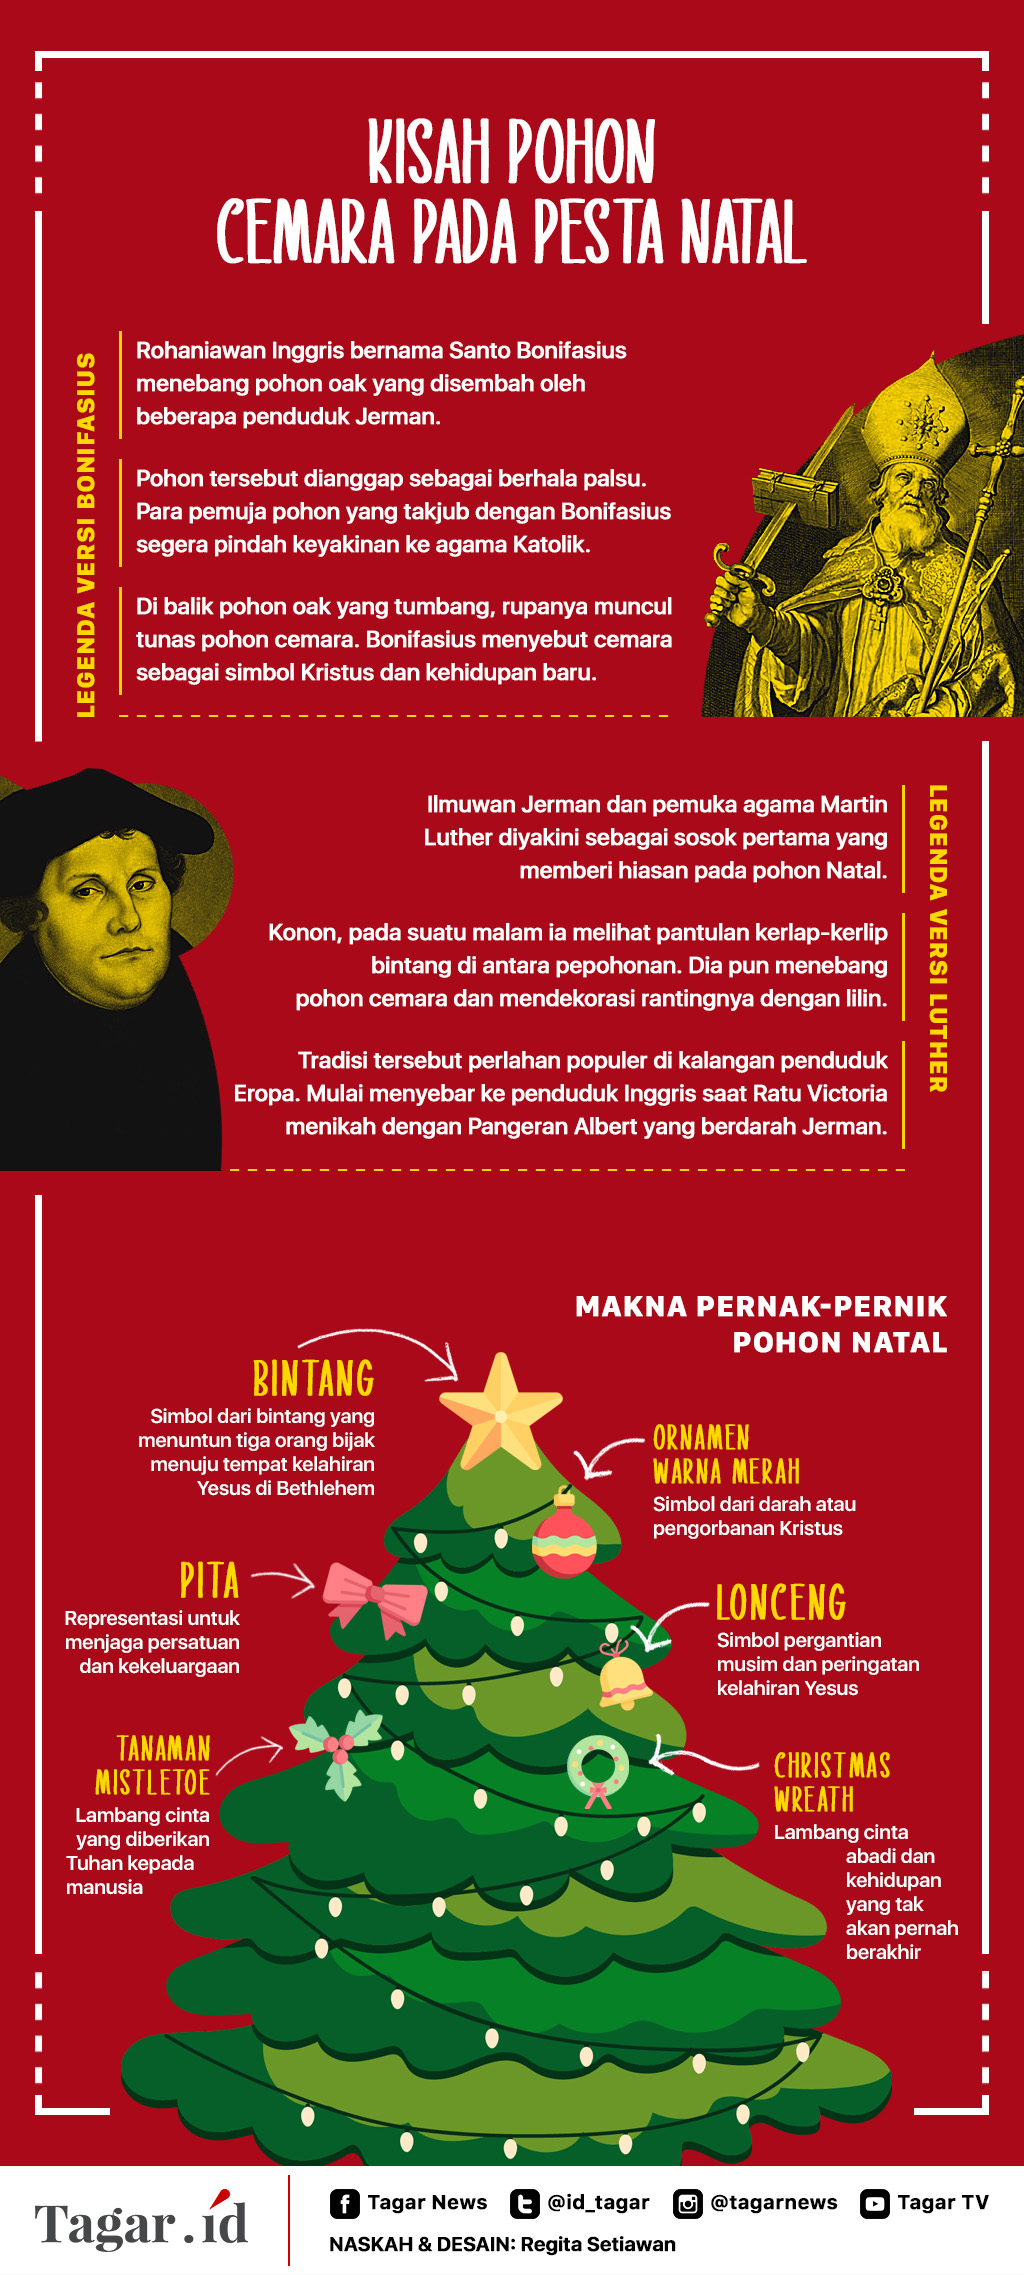 Infografis: Kisah Pohon Cemara pada Pesta Natal